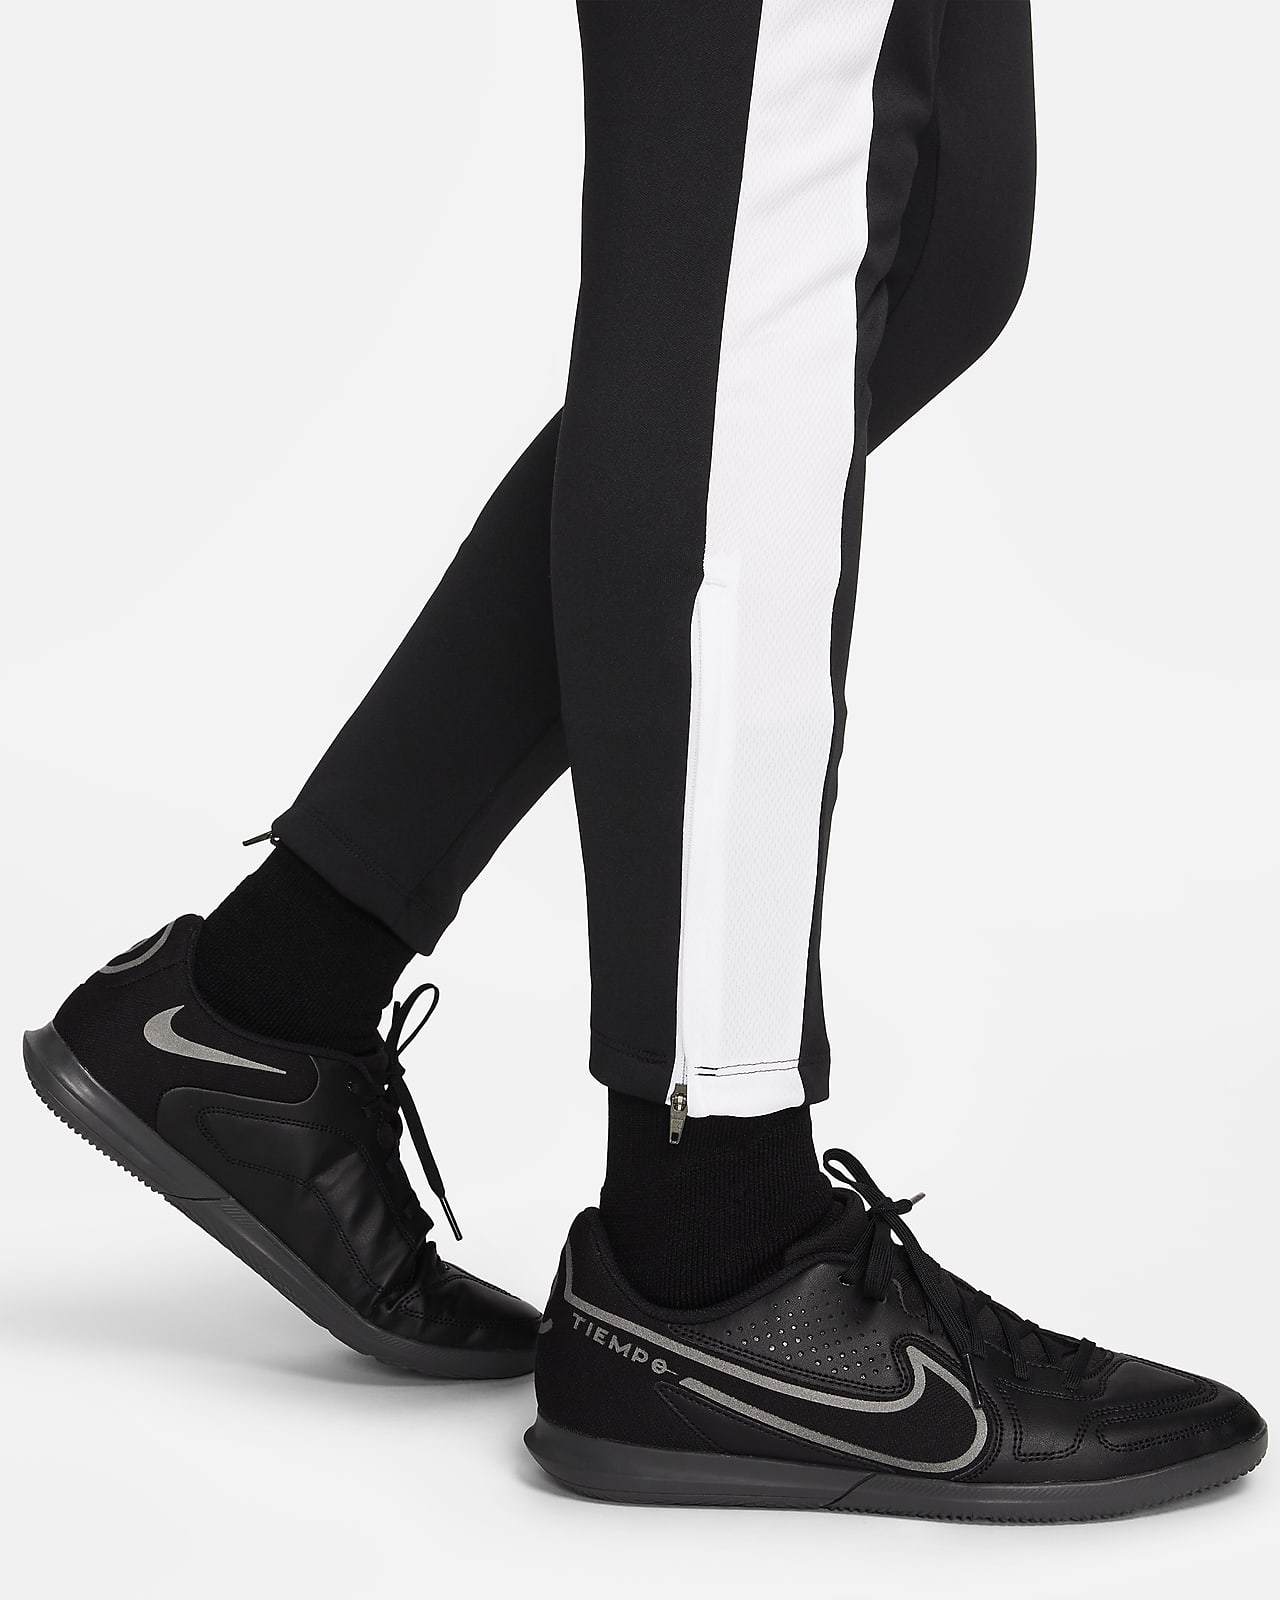 Nike Women's Dry Slim Woven Pant 884932